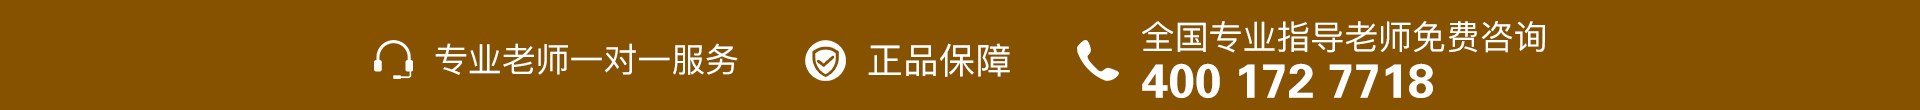 深黄色电话-banner图下方-PC - 副本 (6).jpg